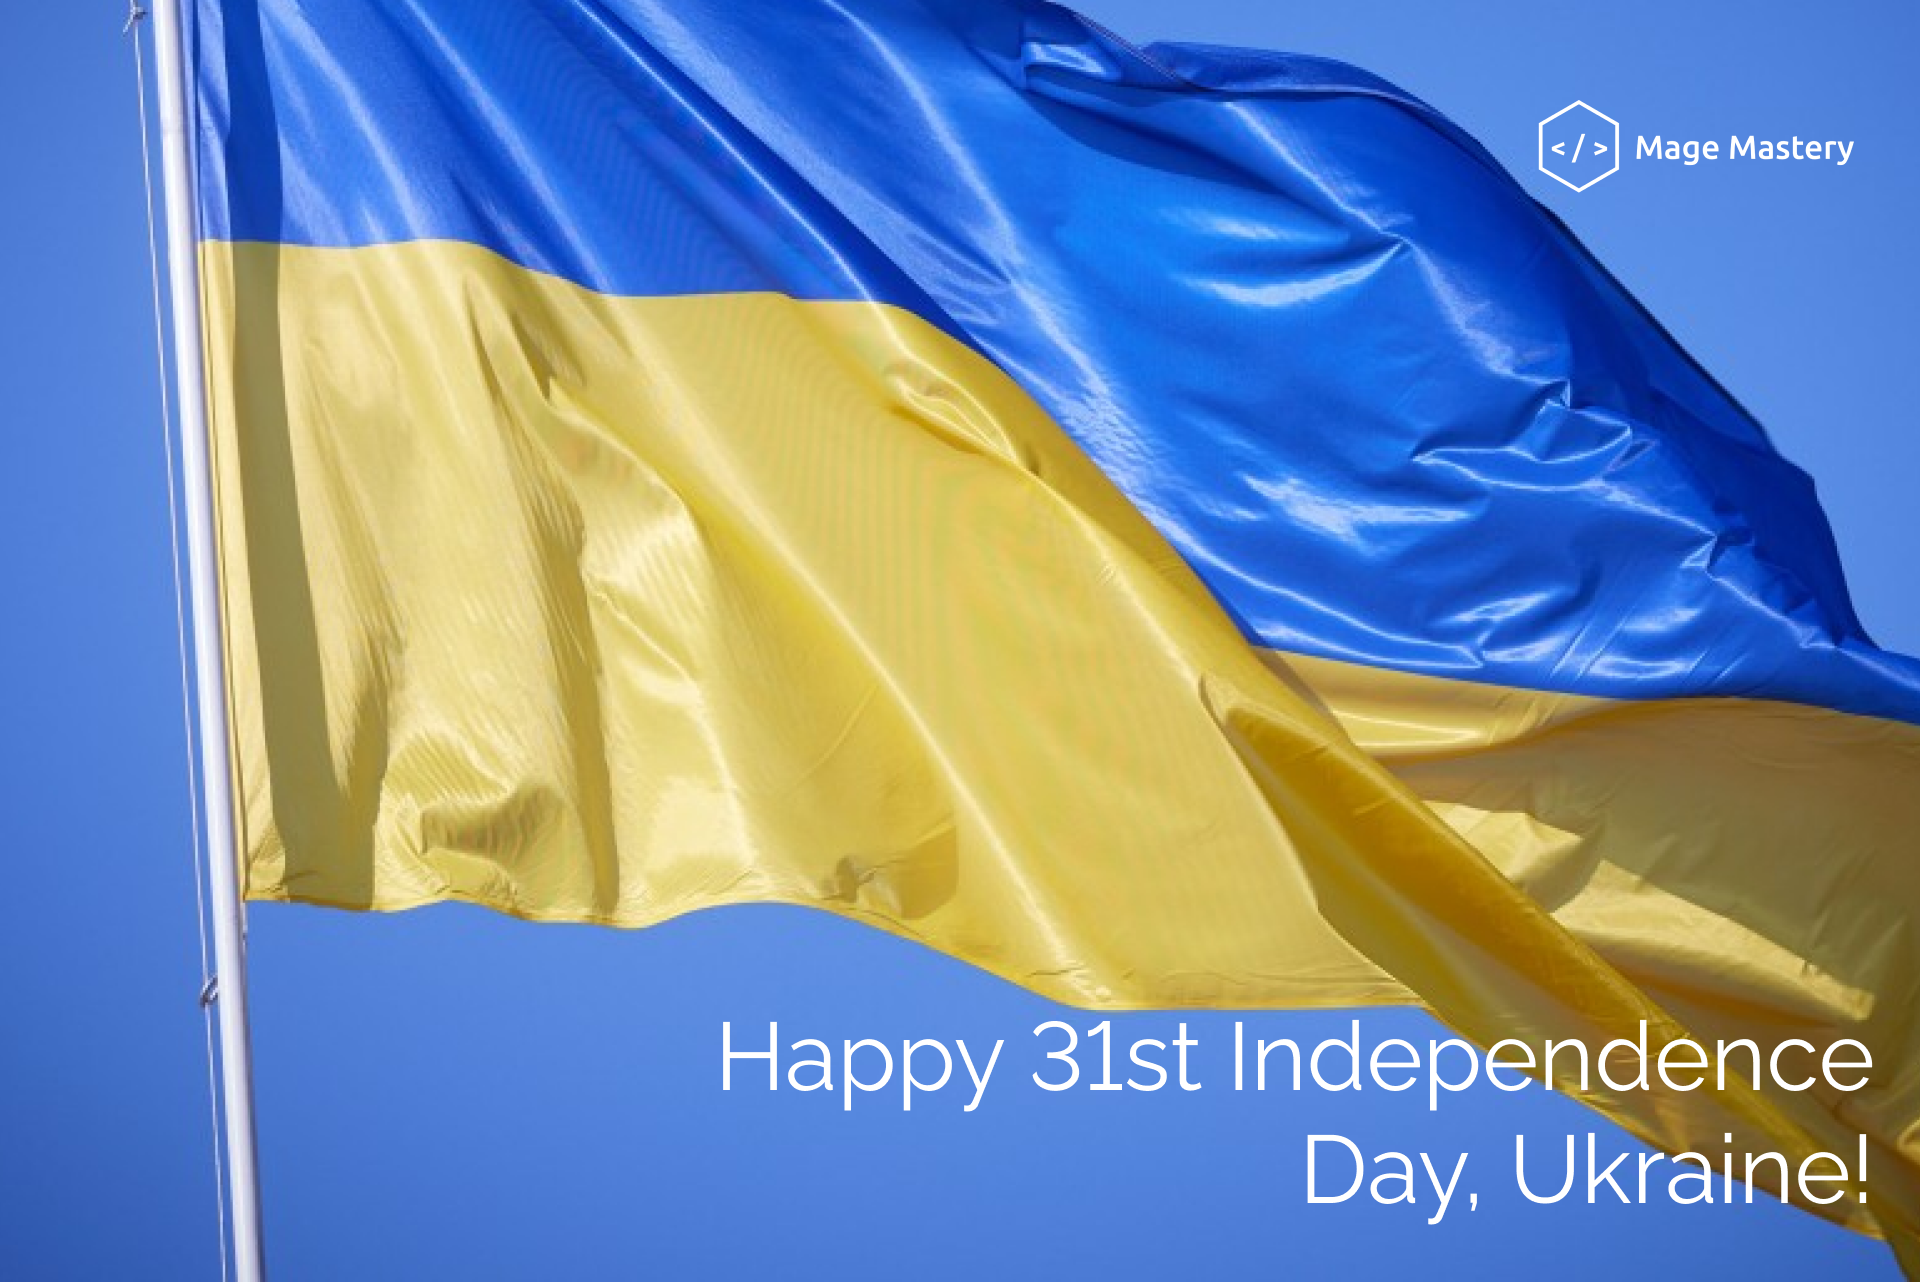 Happy 31st Independence Day, Ukraine!